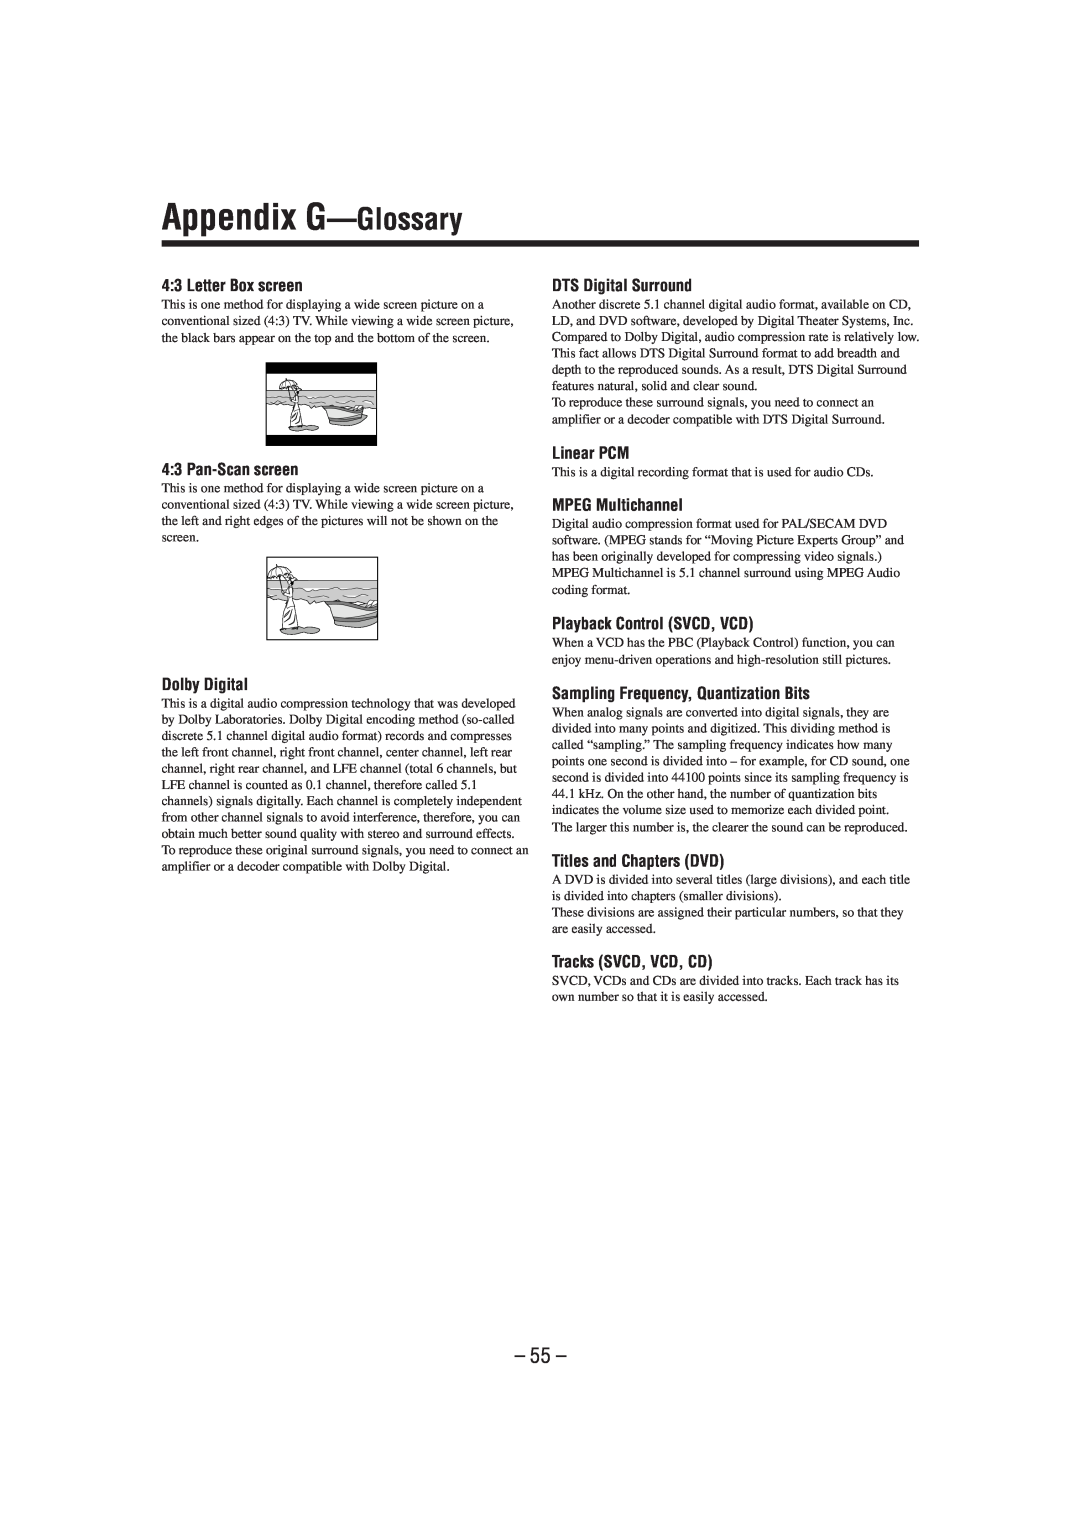 JVC CA-MXDVA9 manual Appendix G-Glossary, 4:3 Letter Box screen, DTS Digital Surround, 4 3 Pan-Scanscreen, Dolby Digital 